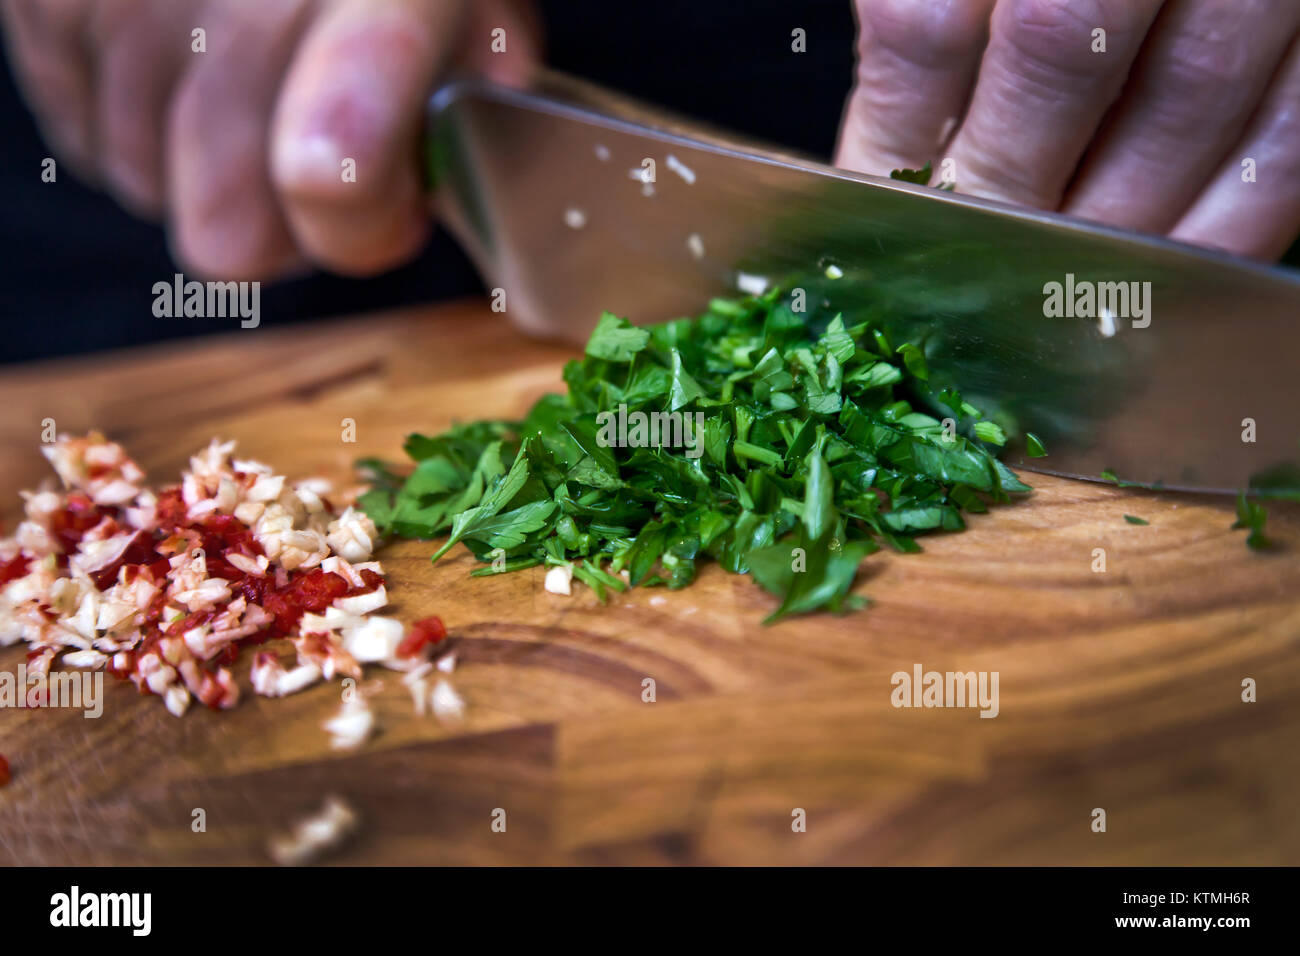 Food preparation - dicing Coriander on chopping board Stock Photo